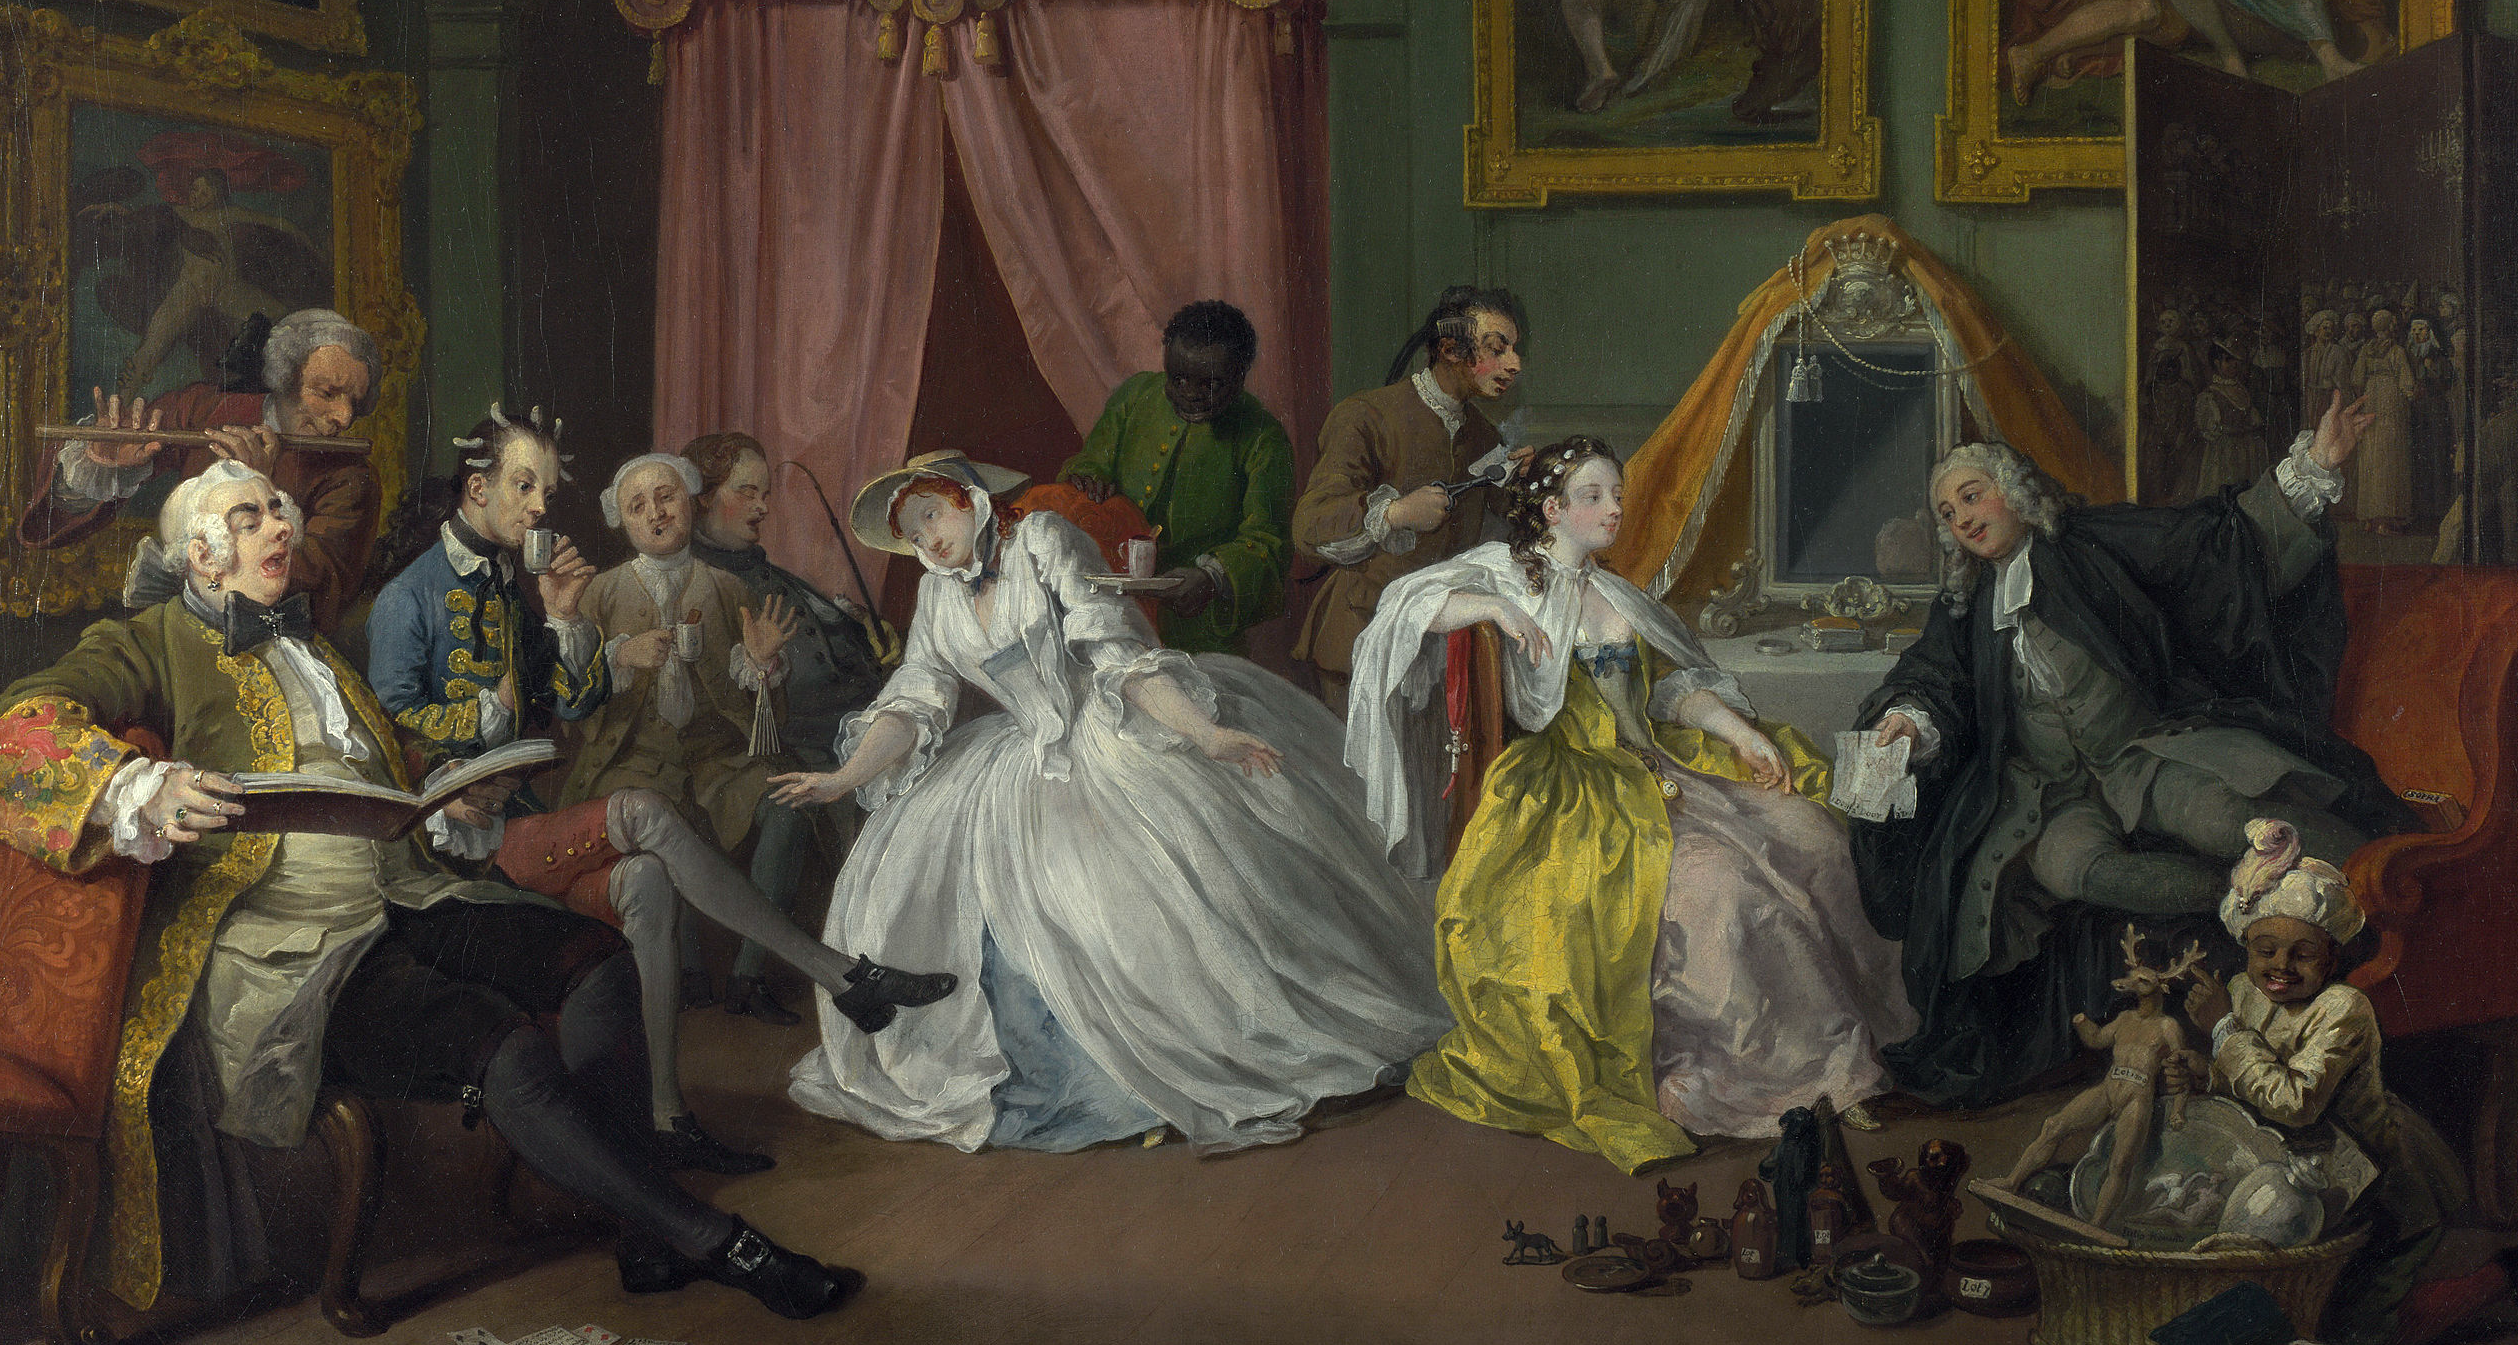 Хогарт модный брак. Уильям Хогарт модный брак. Уильям Хогарт картины модный брак. Будуар графини Уильям Хогарт. William Hogarth (1697-1764).